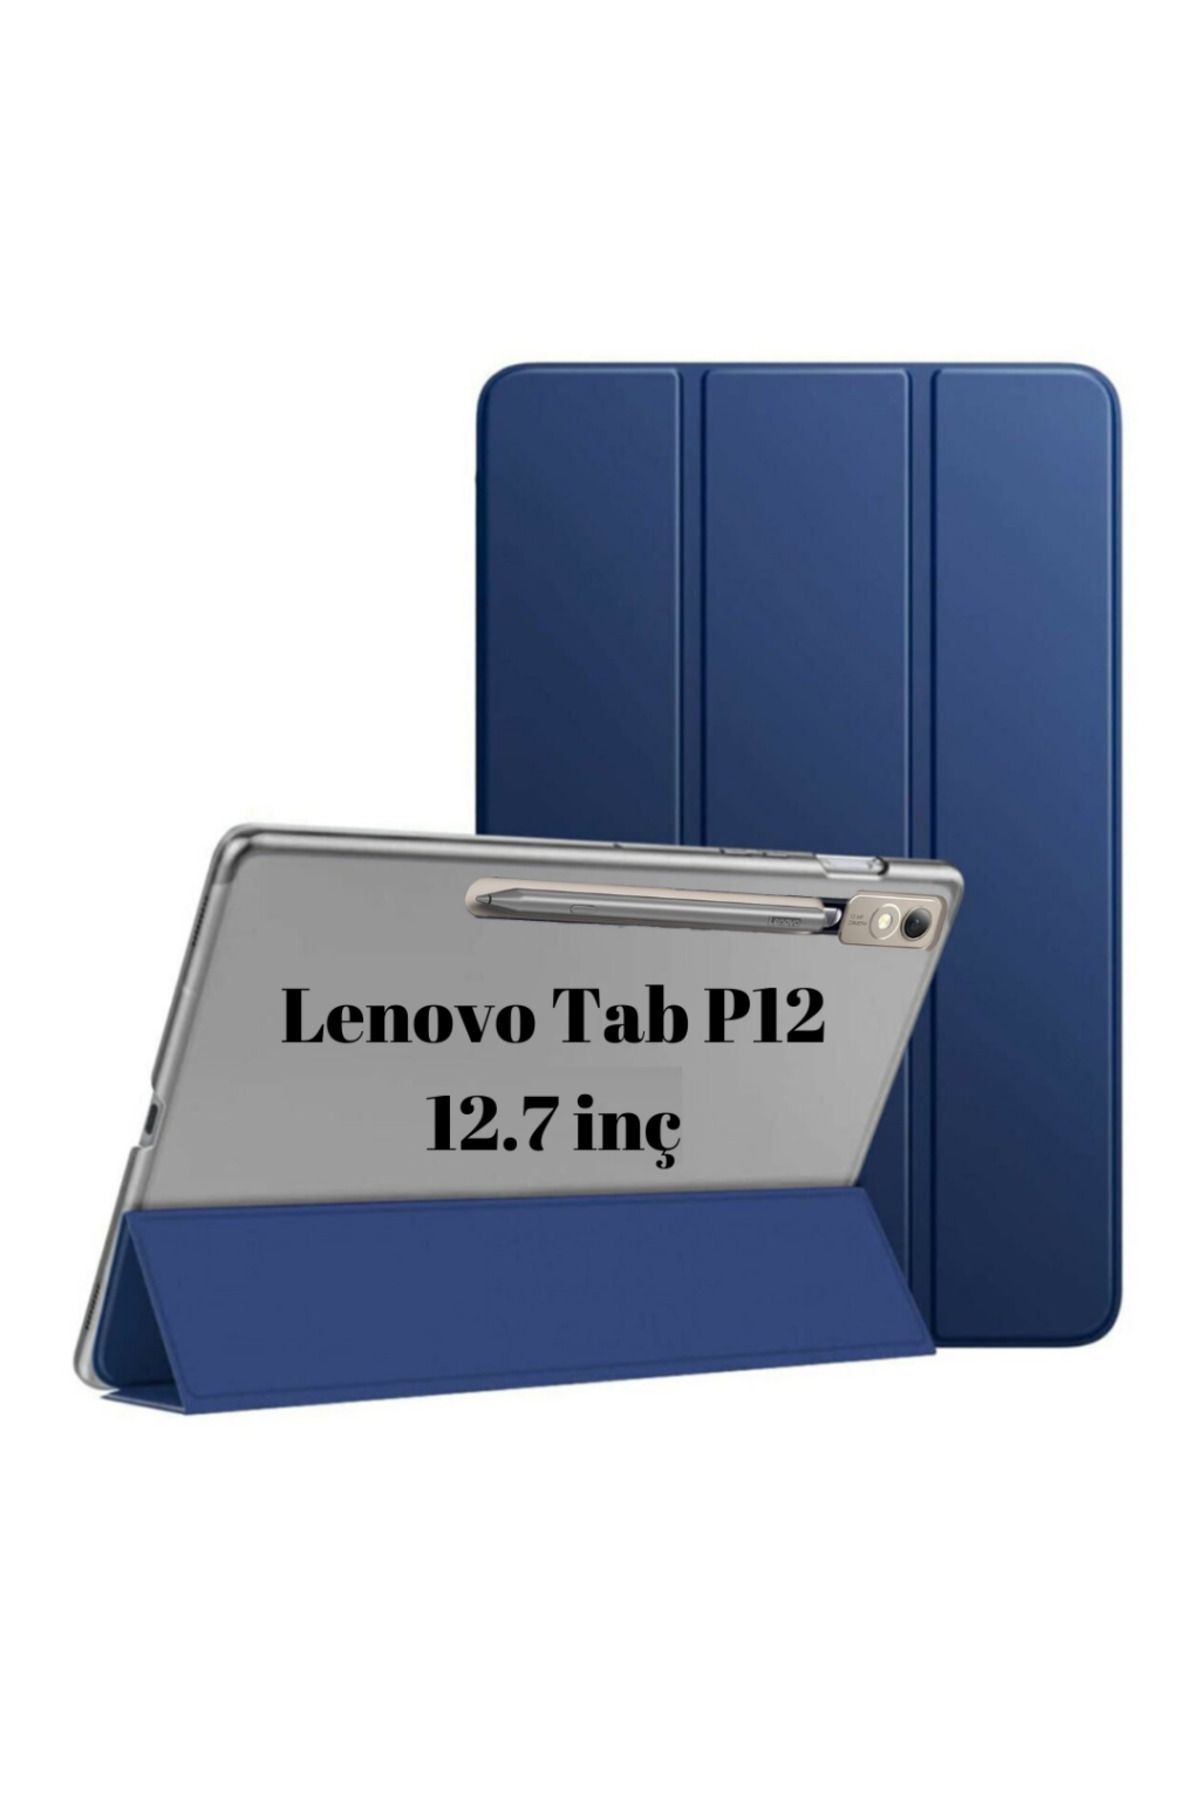 UnDePlus Lenovo Tab P12 12.7inç Tb370fu Kalem Bölmeli Kılıf Pu Deri Smart Standlı Case